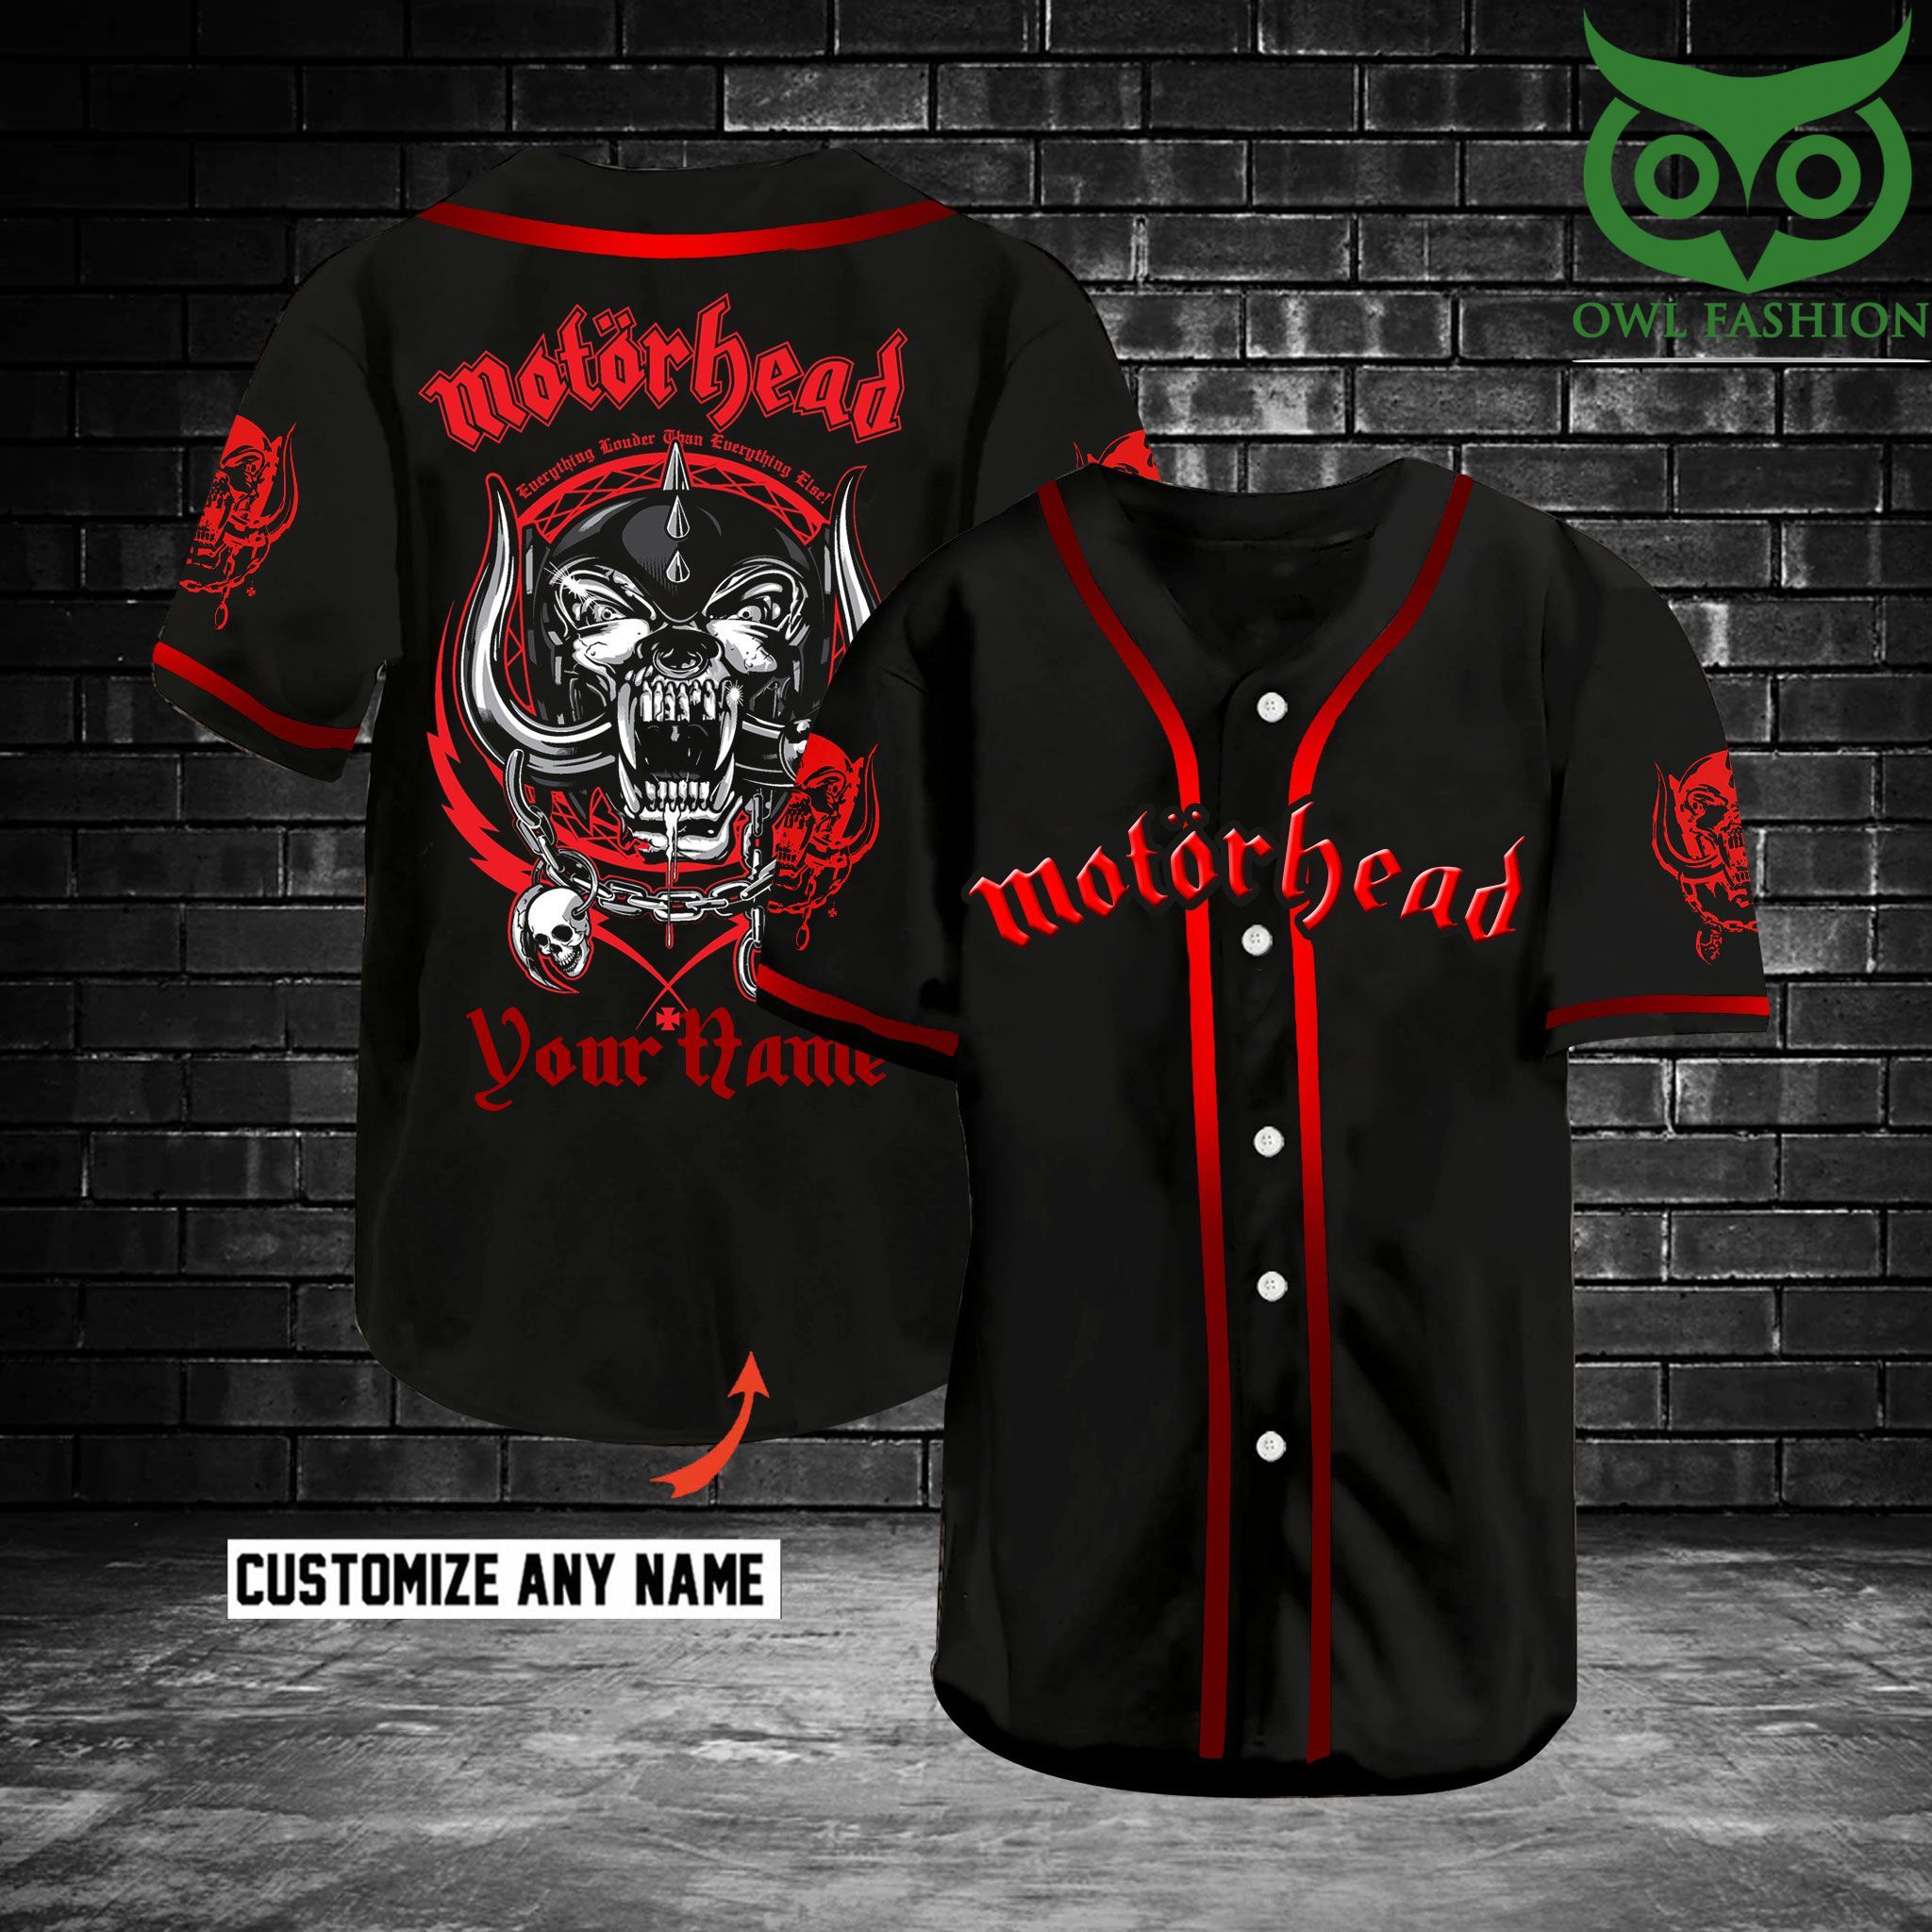 Motorhead Customize Name Baseball Jersey Shirt